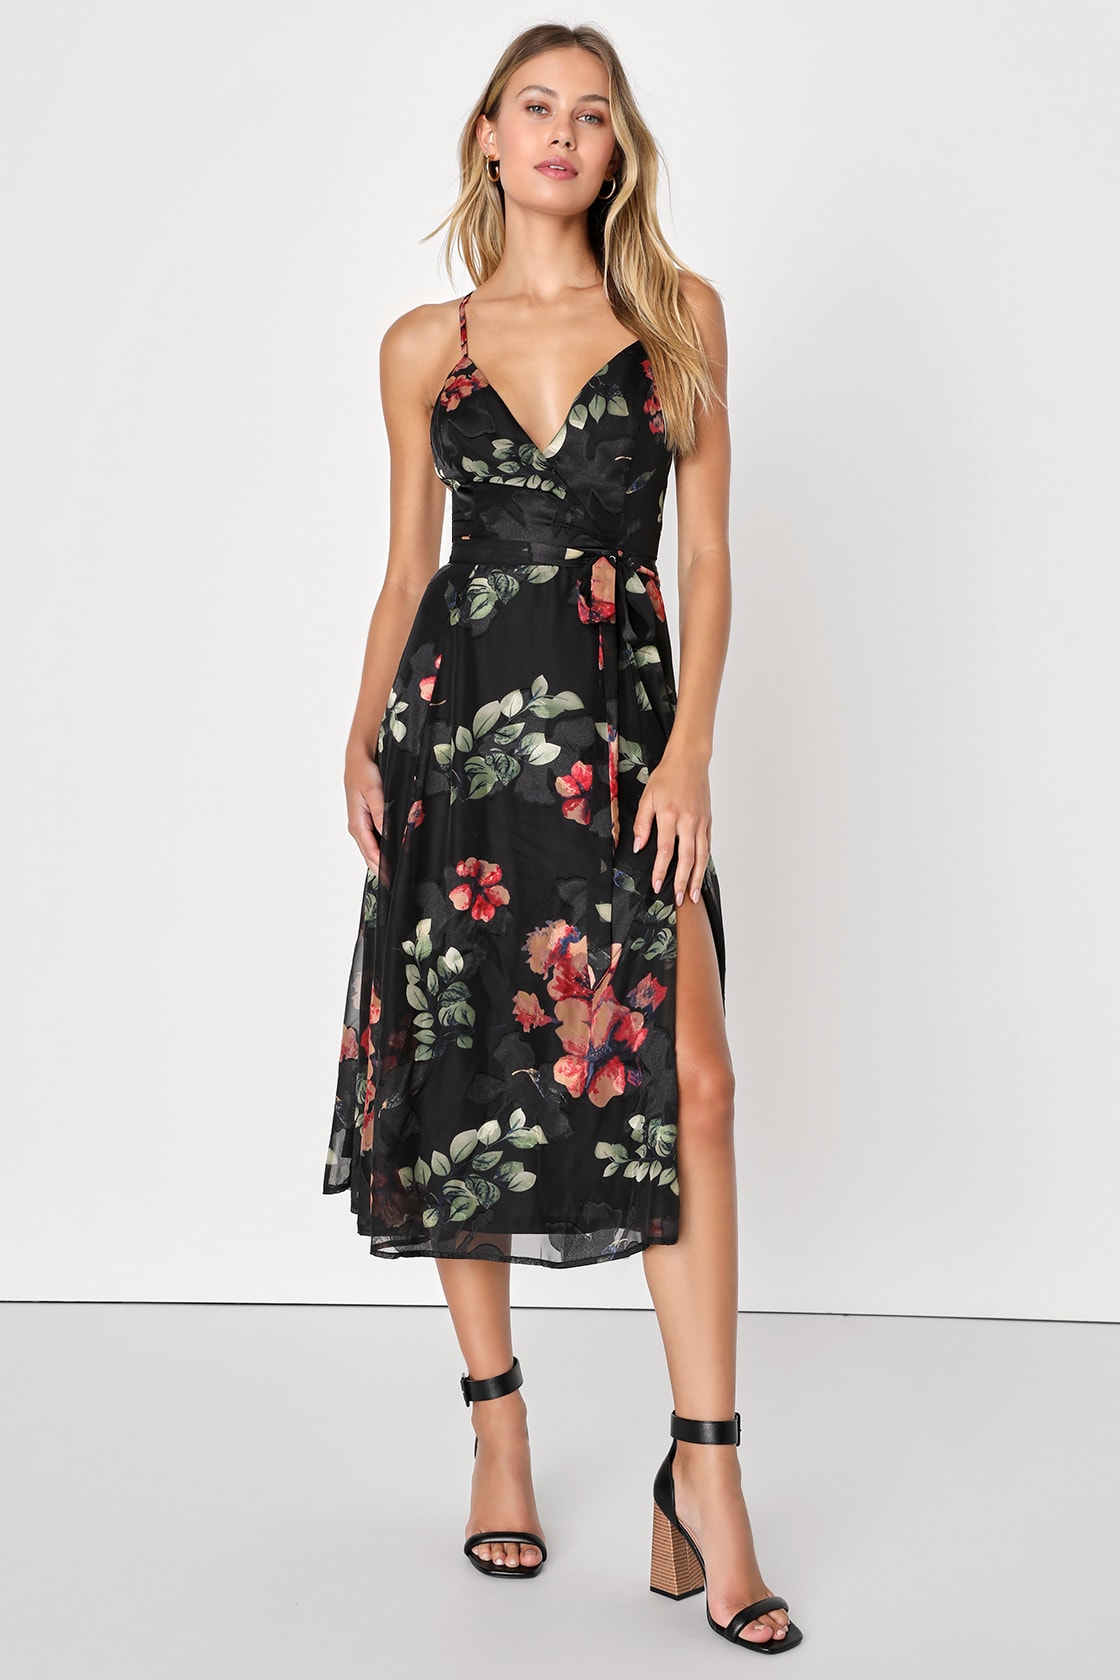 Flawless Sweetie Black Floral Jacquard Sleeveless Midi Dress